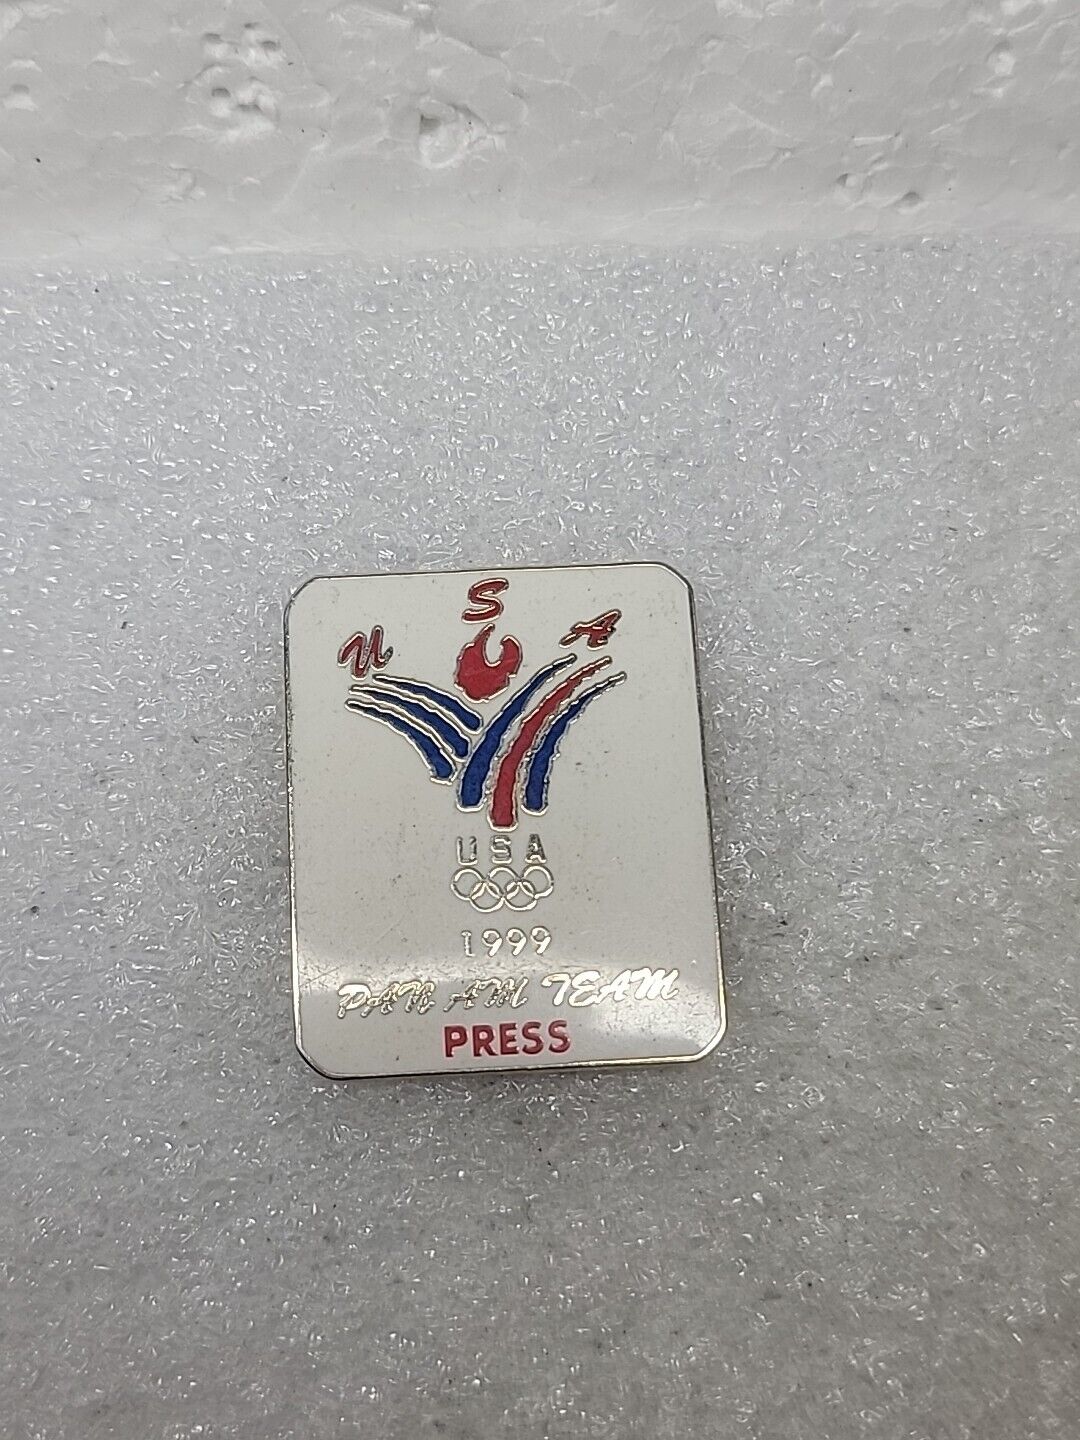 Winnipeg 1999 Pan Am Games USA Pan Am Team Press media pin made by Aminco